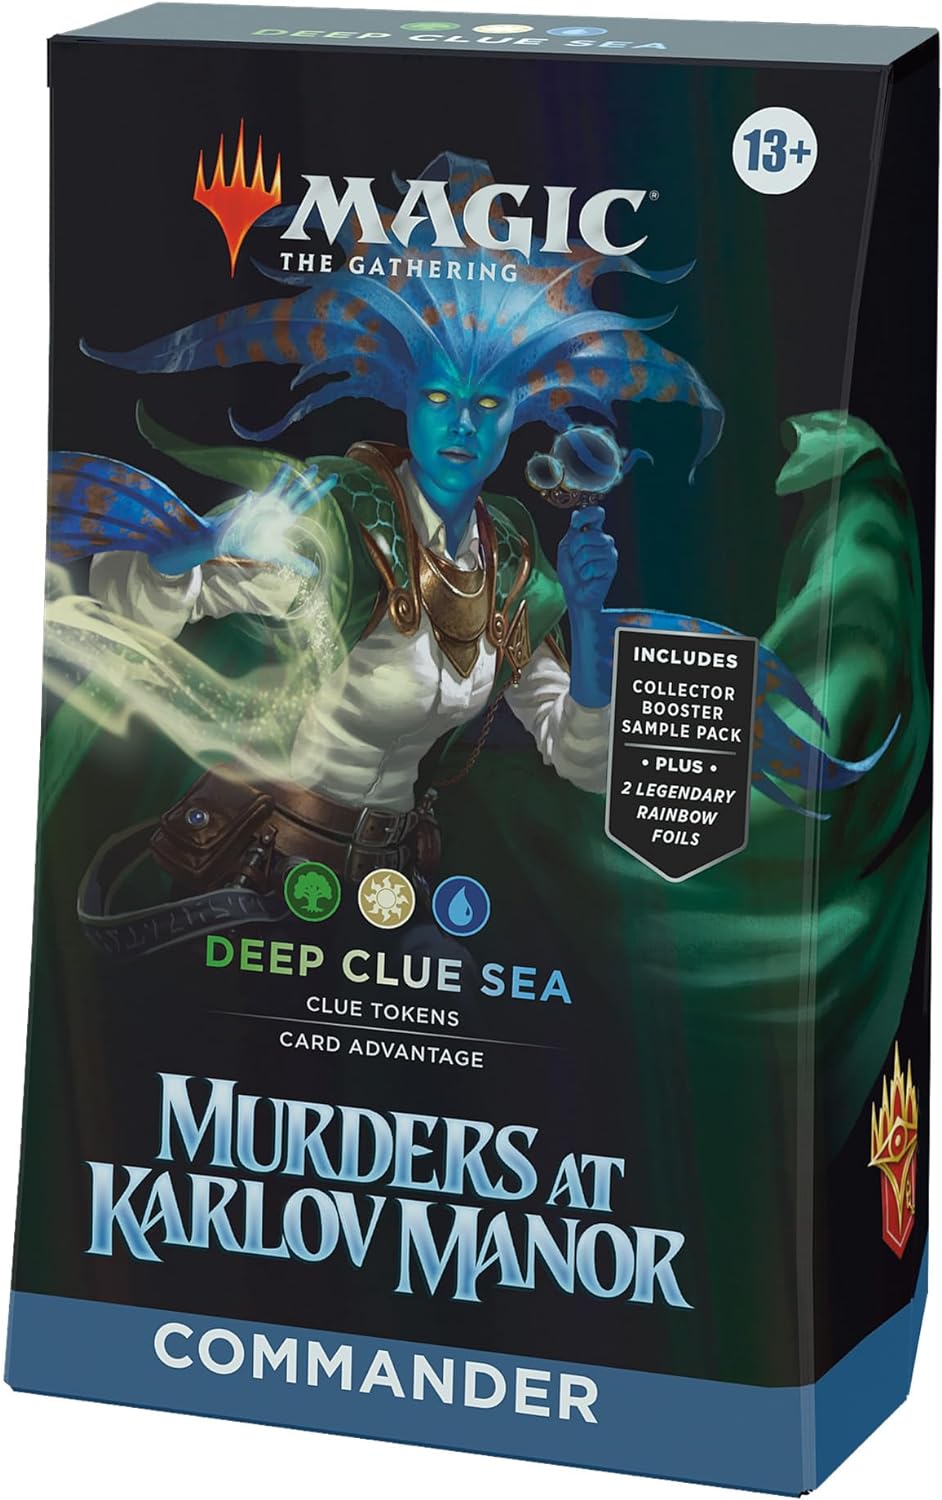 Magic The Gathering - Murders at Karlov Manor Commander Deck Deep Clue Sea MK9ETFWKZ1 |0|